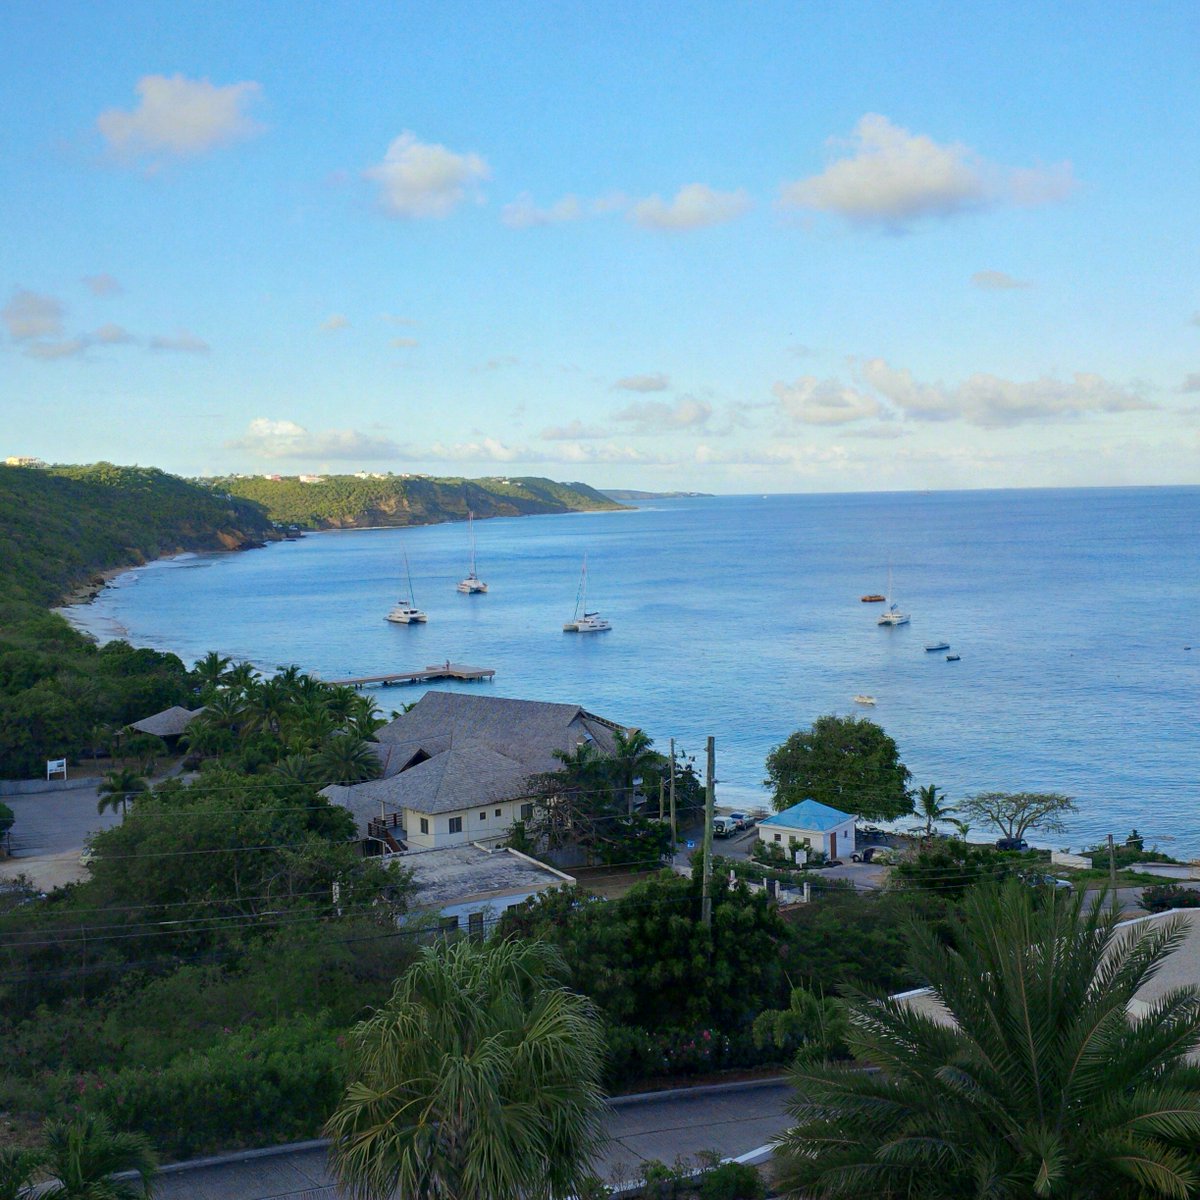 Good morning #Anguilla! #Crocusbay view #sunrise @Ceblueanguilla @zoomermag @jessonco #paradise #beach #travel